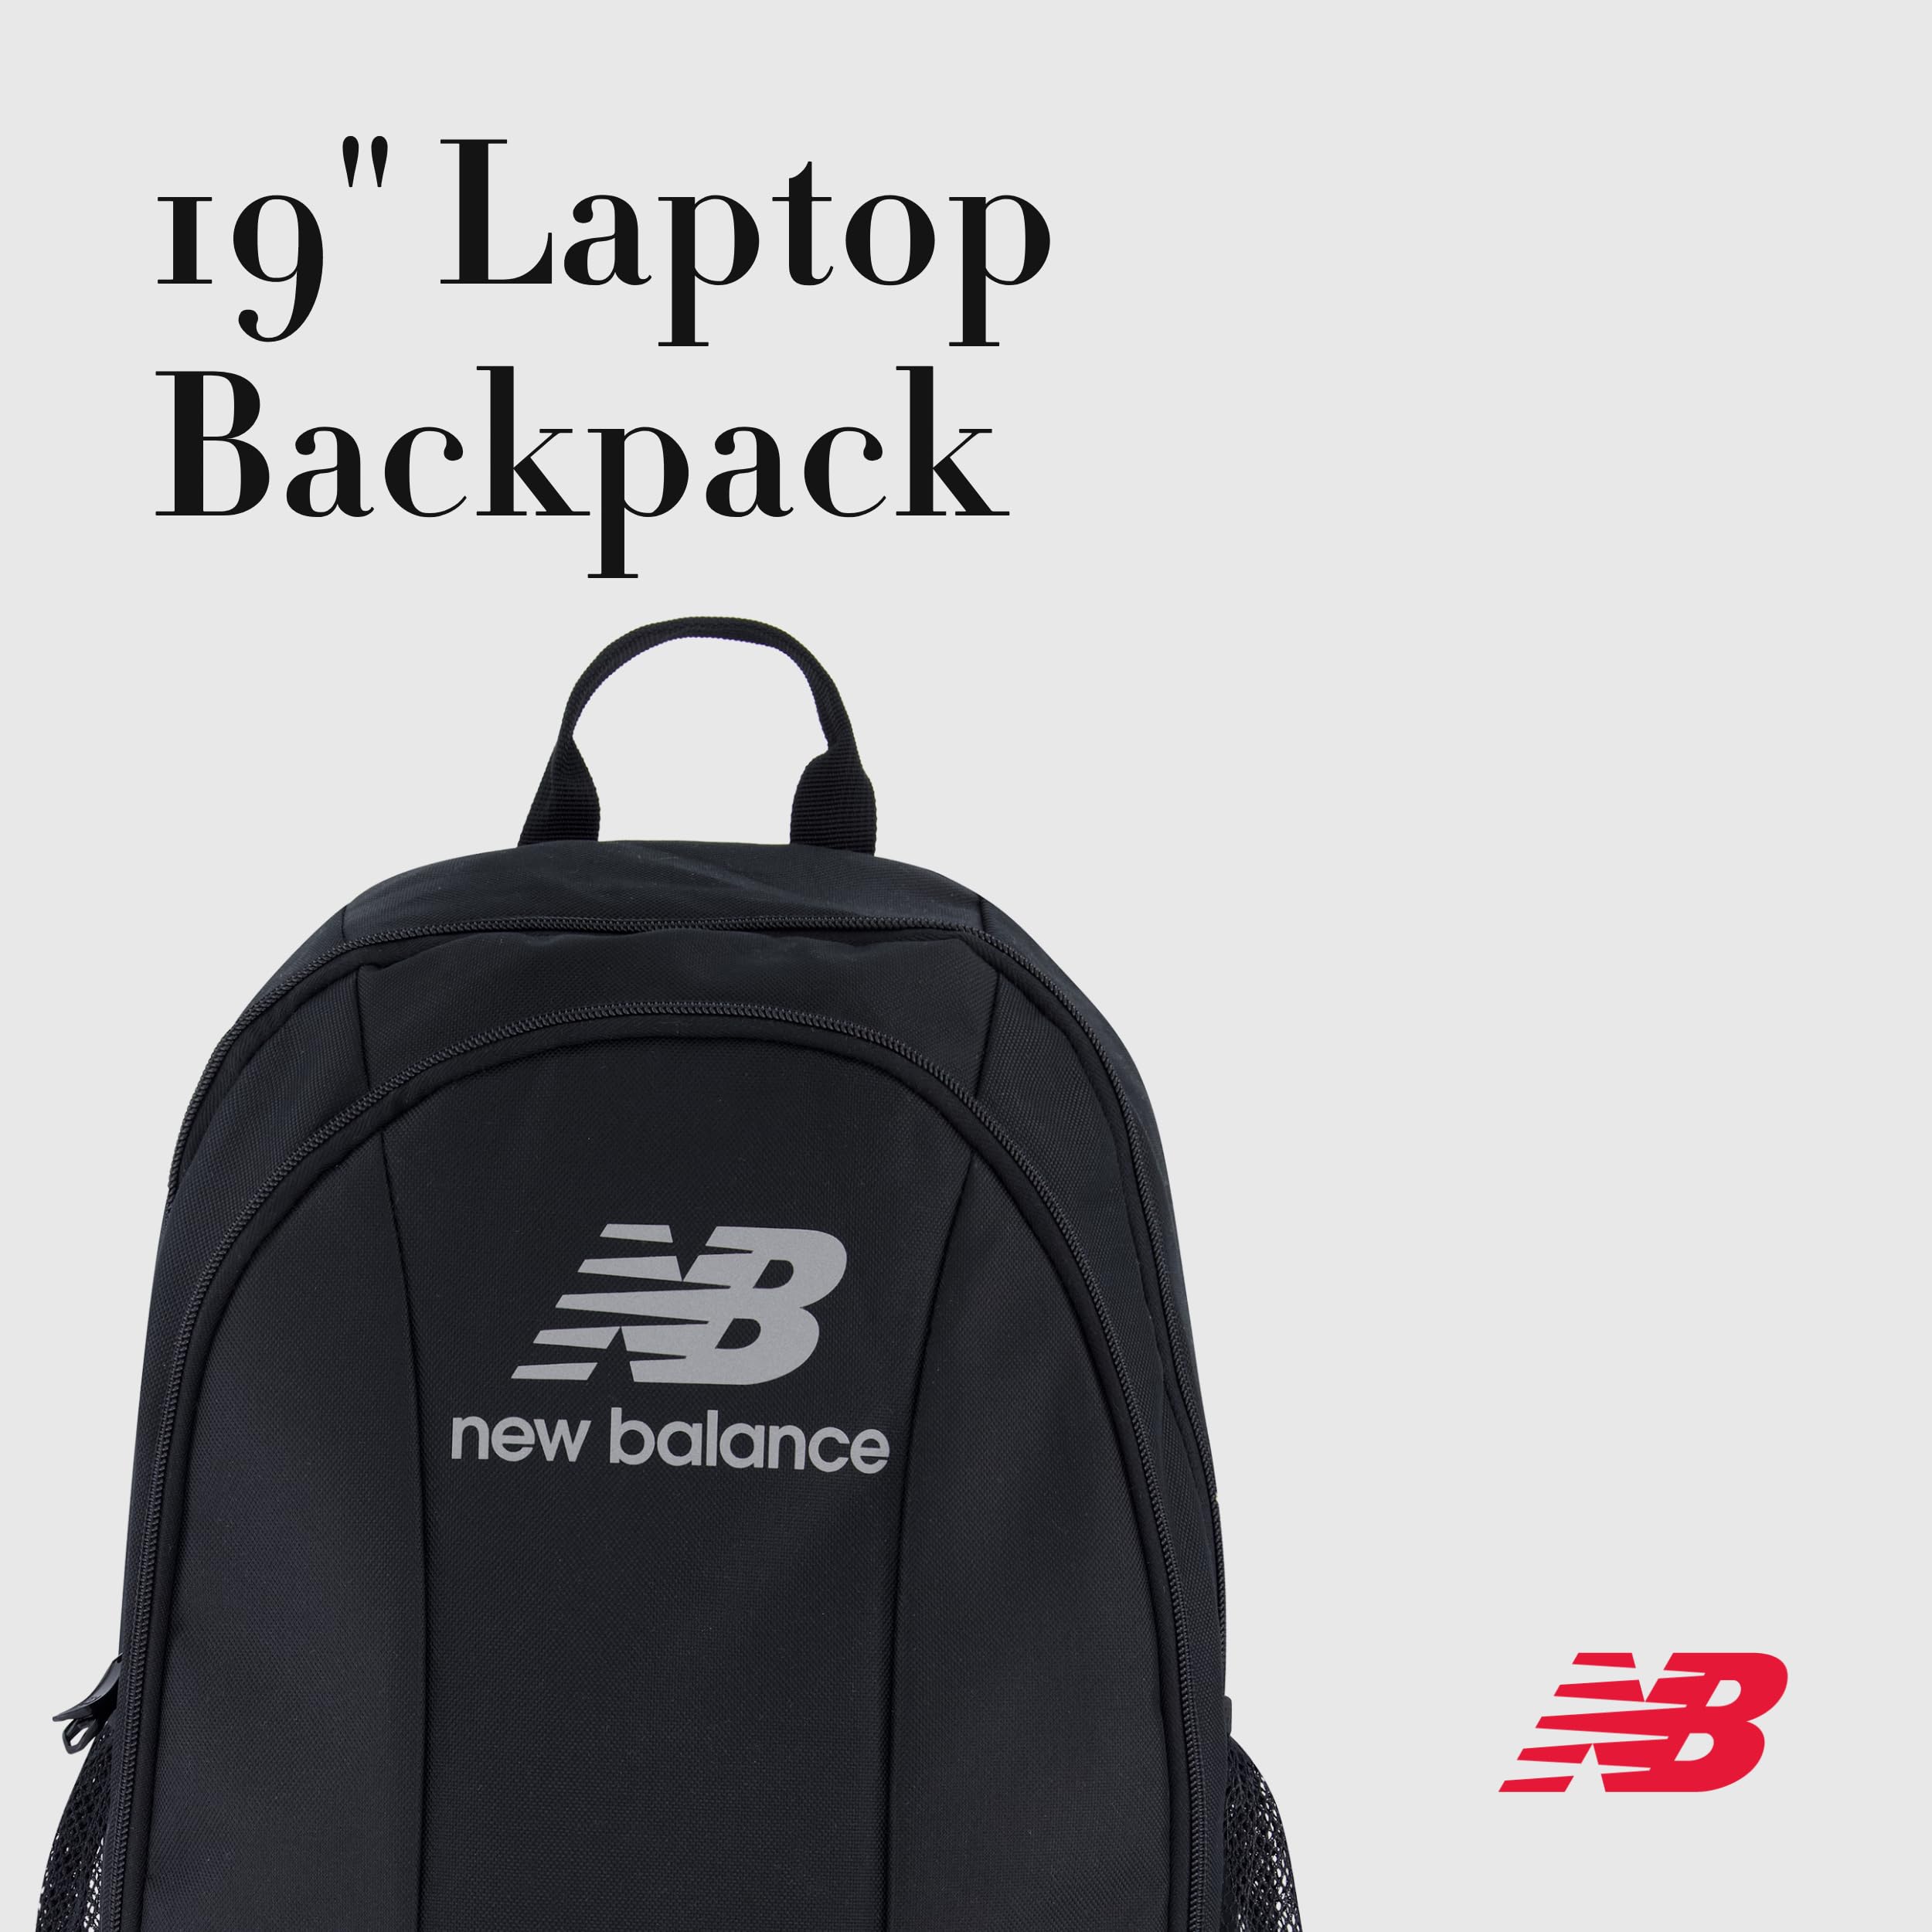 New Balance Laptop Backpack, Commuter Travel Bag for Men and Women, Black, 19 Inch